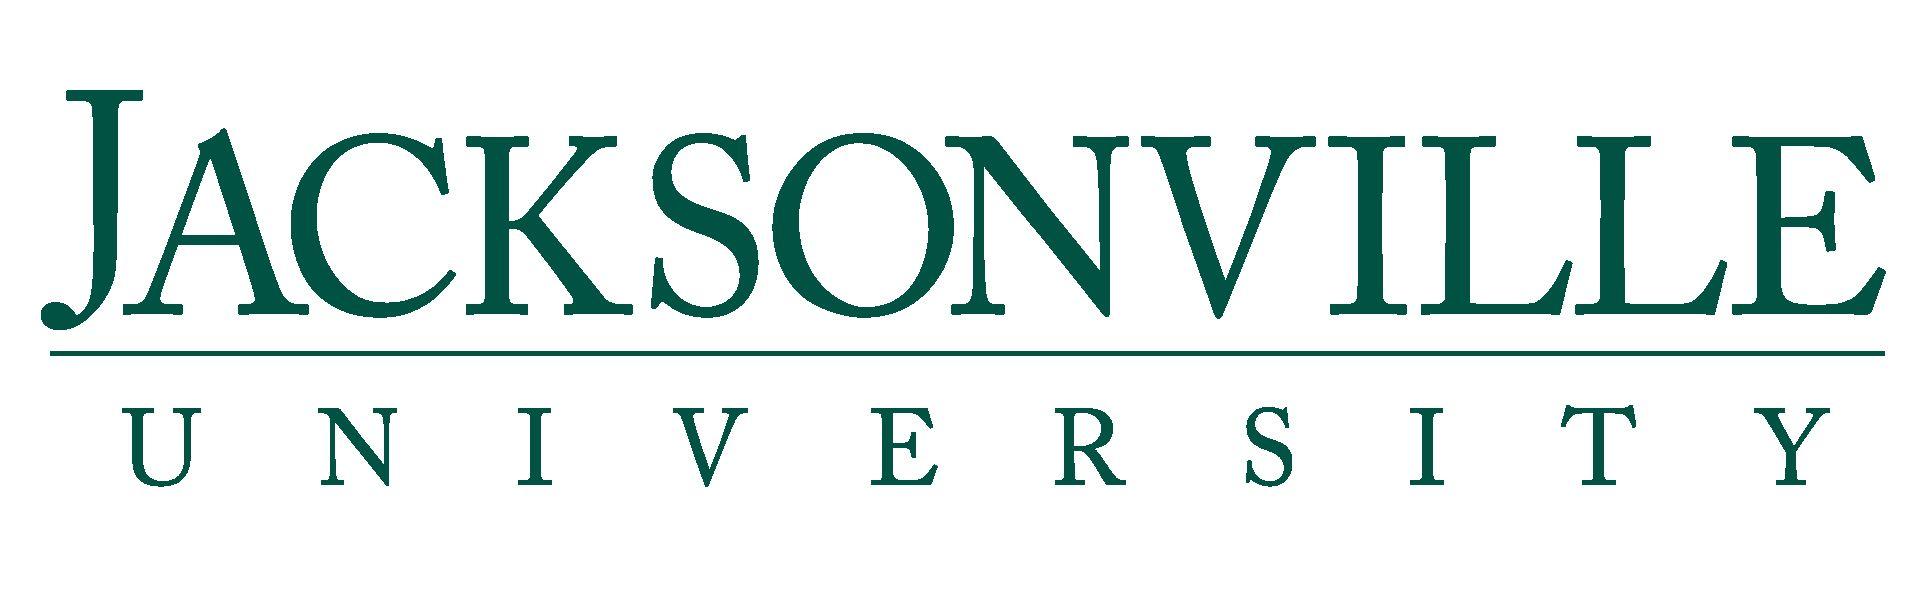 Jacksonville Dolphins Logo - Jacksonville university Logos